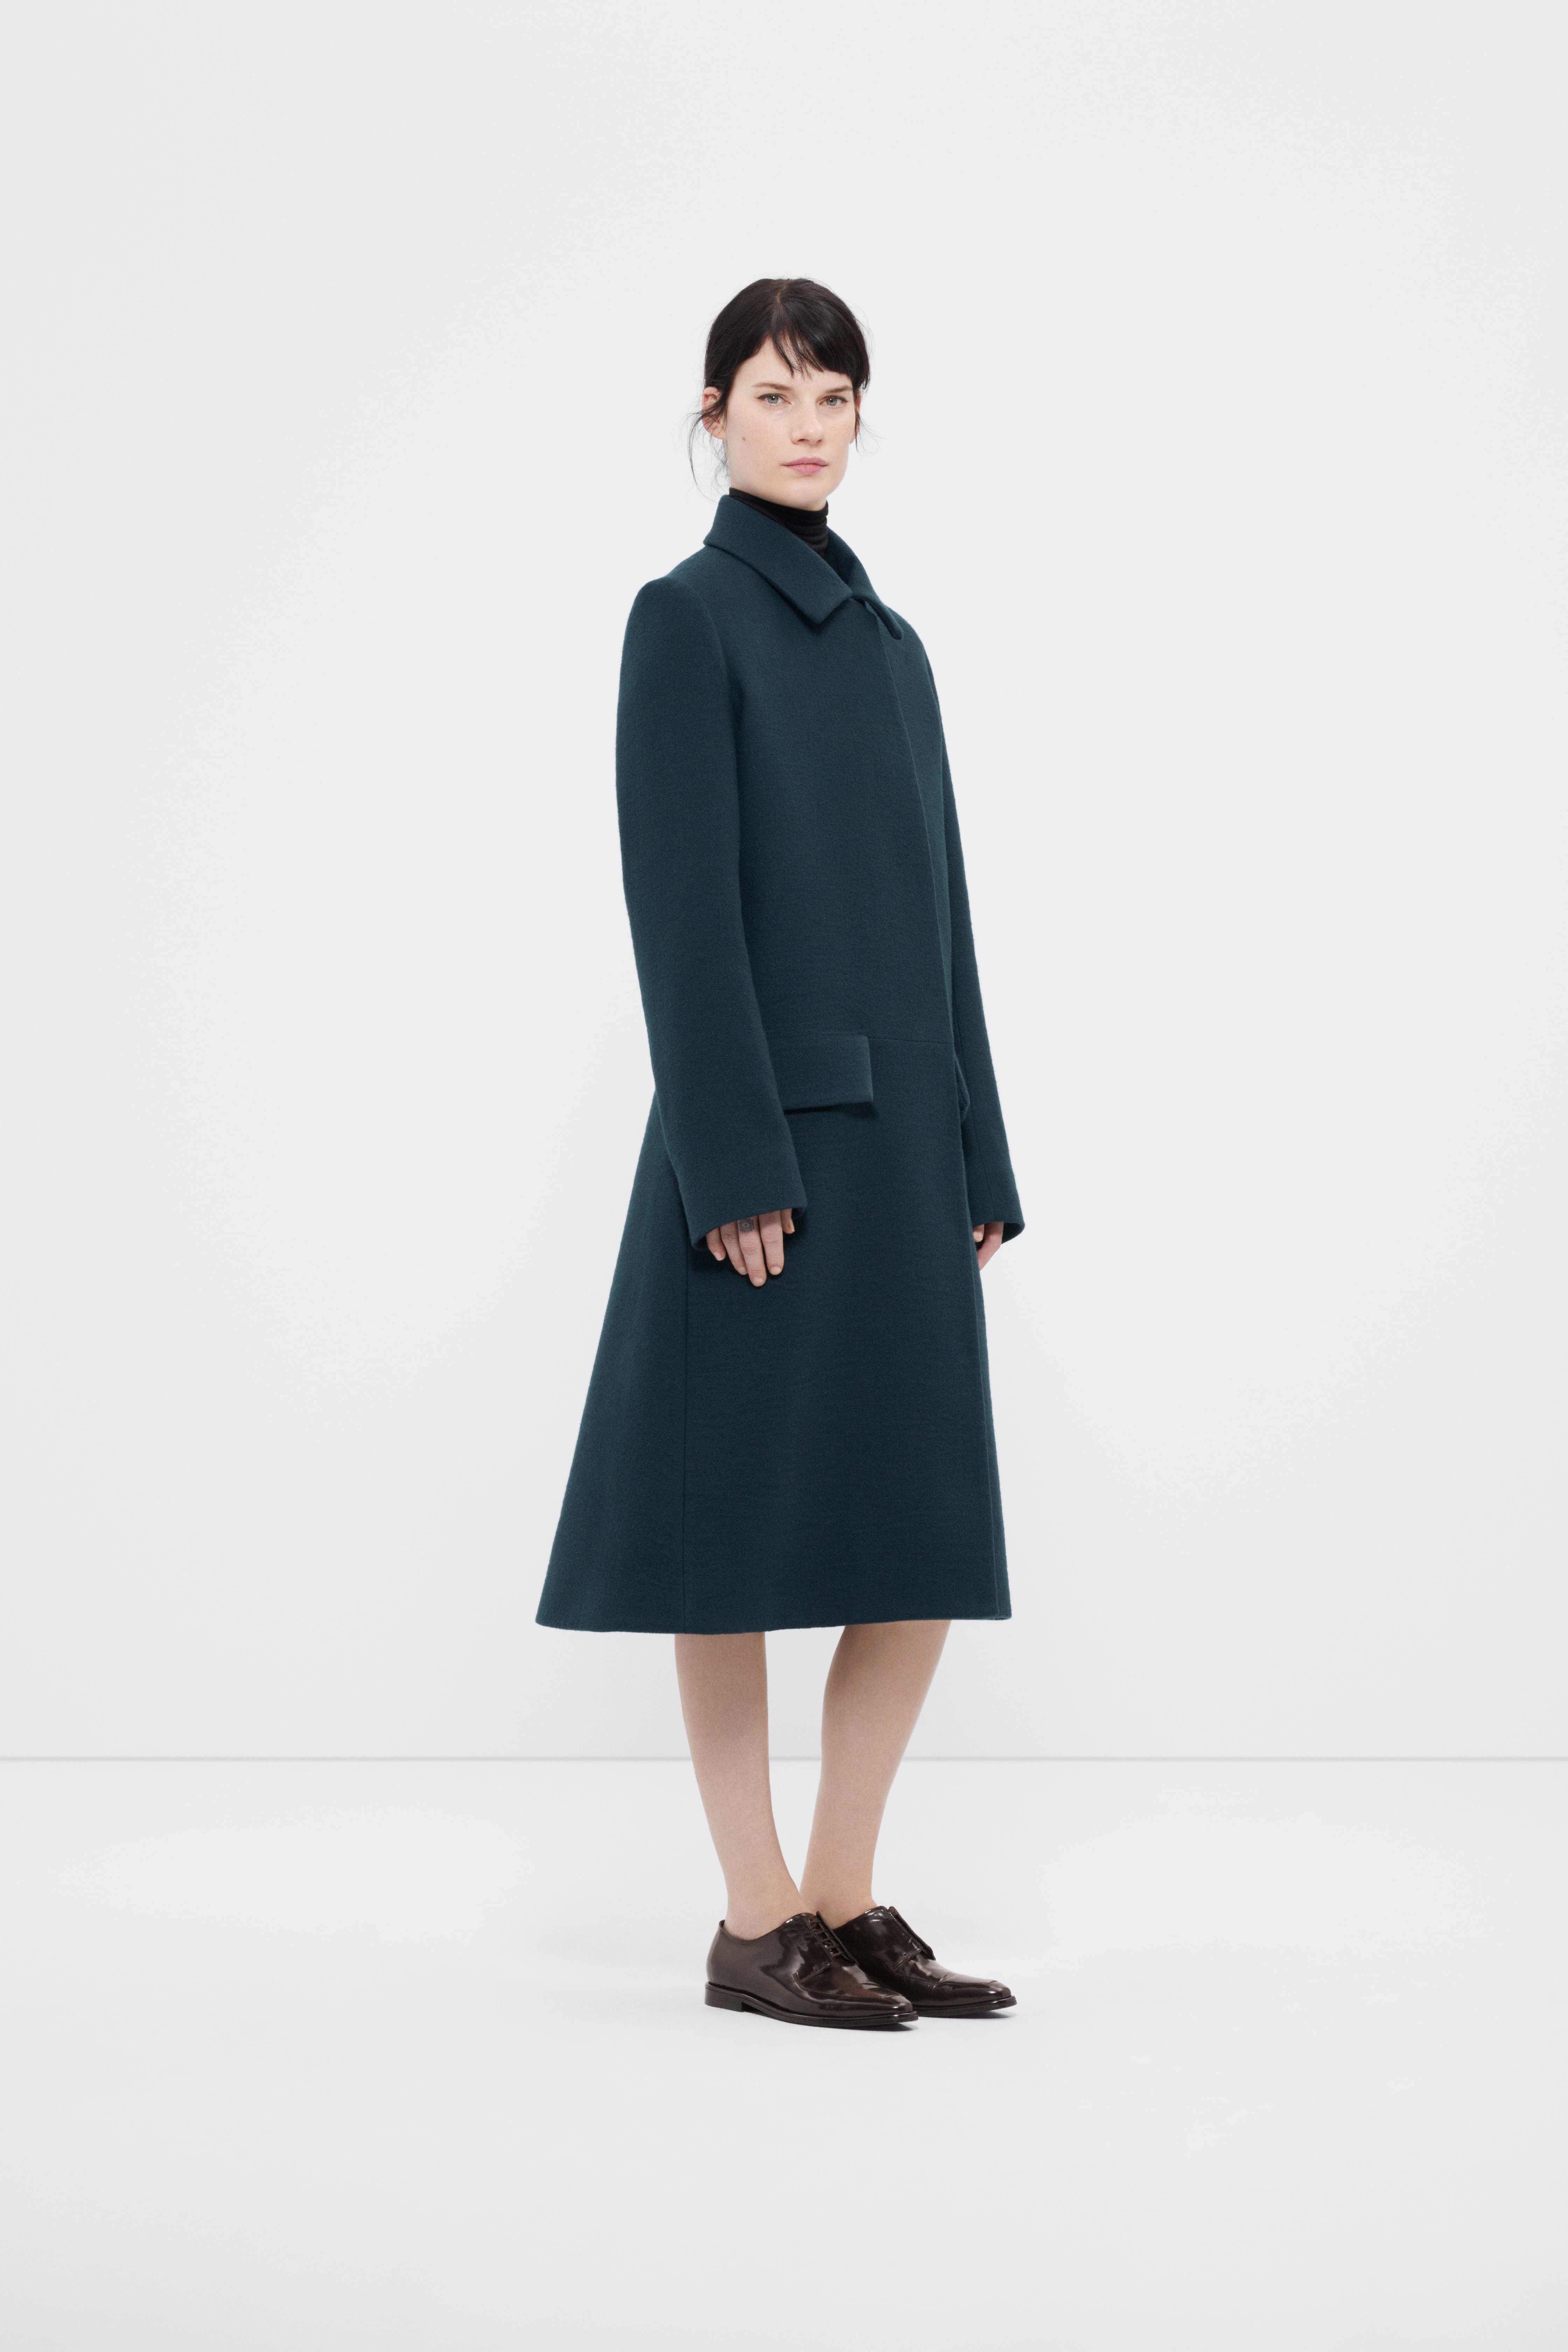 COS Fall/Winter 2018 Minimalist Fashion Lookbook Basics Minimal Simple Scandinavian Style